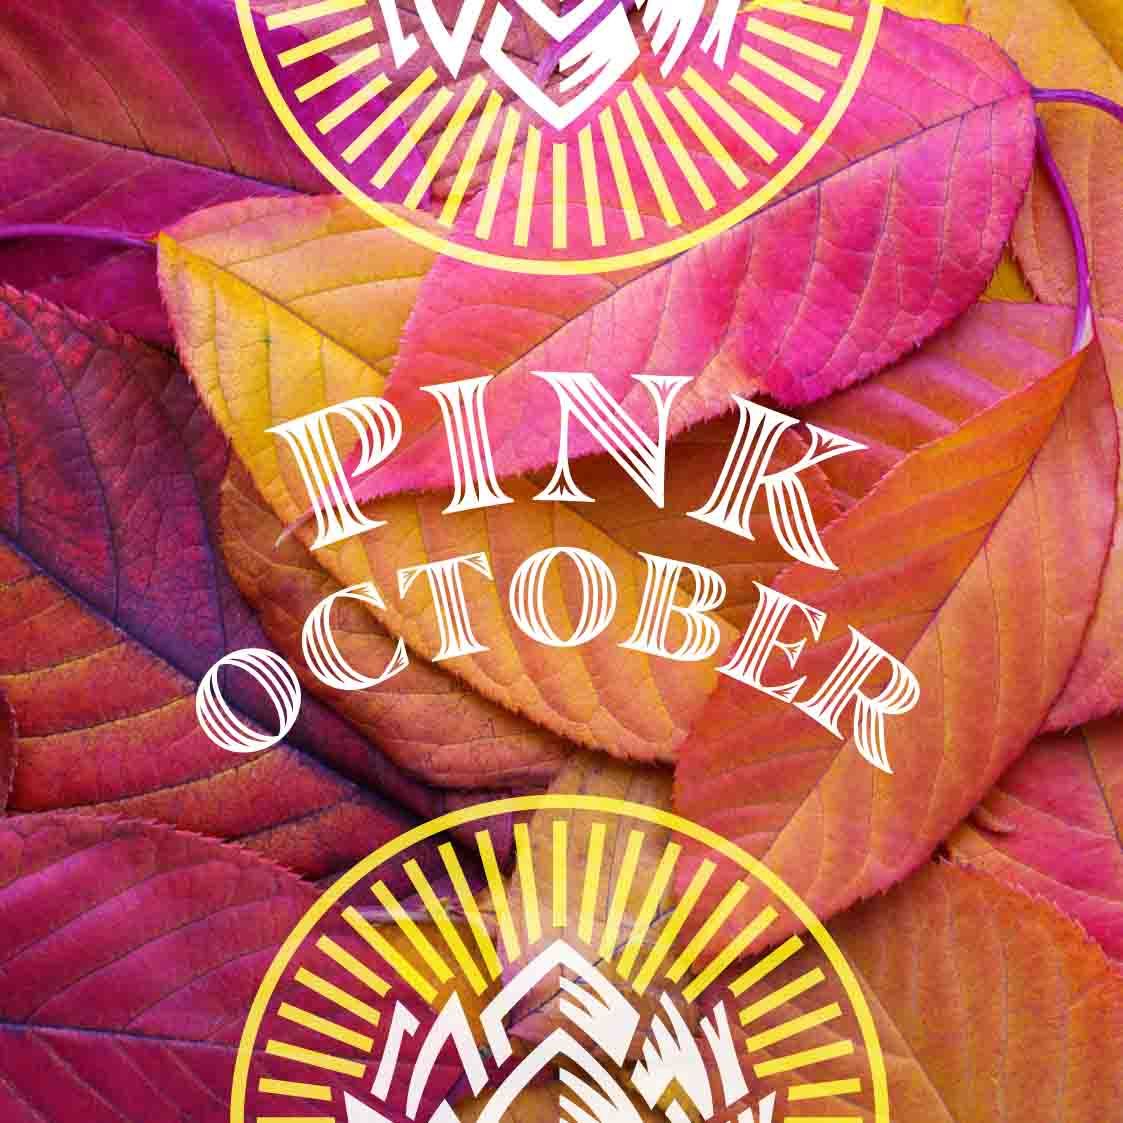 Pink October - brassée par La Brasserie BLEUE et la Brasserie Artisanale de Nice